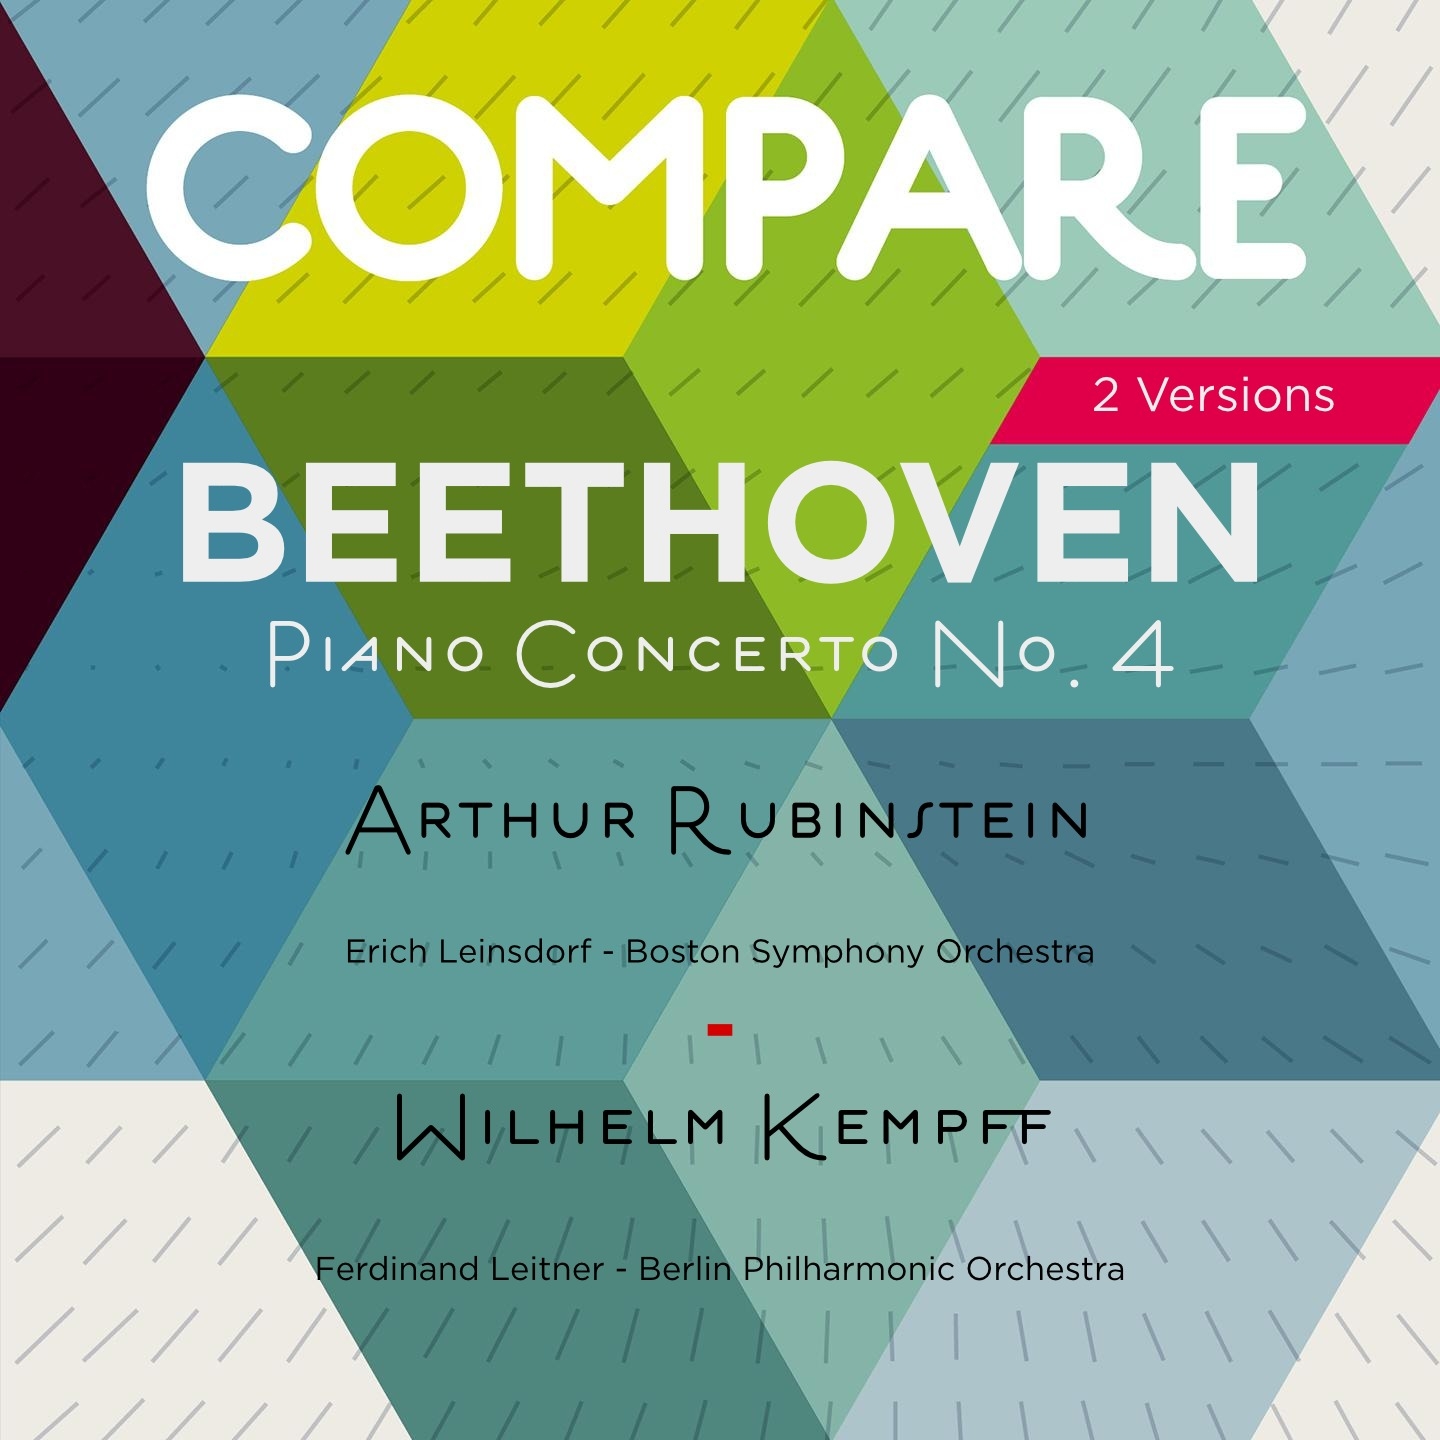 Beethoven: Piano Concerto No. 4, Arthur Rubinstein vs. Wilhelm Kempff